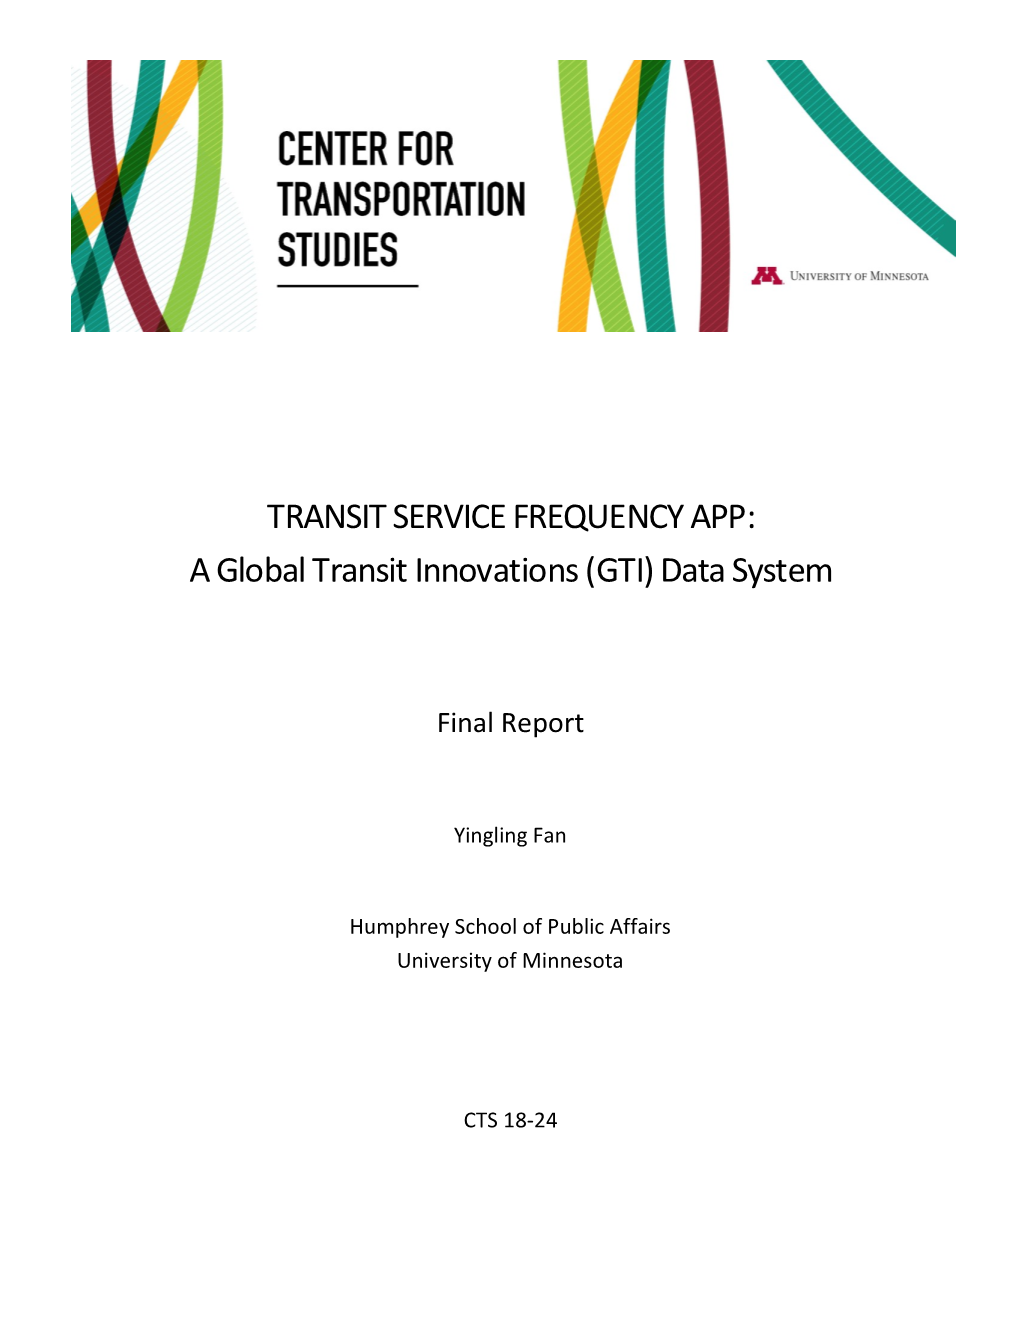 A Global Transit Innovations (GTI) Data System